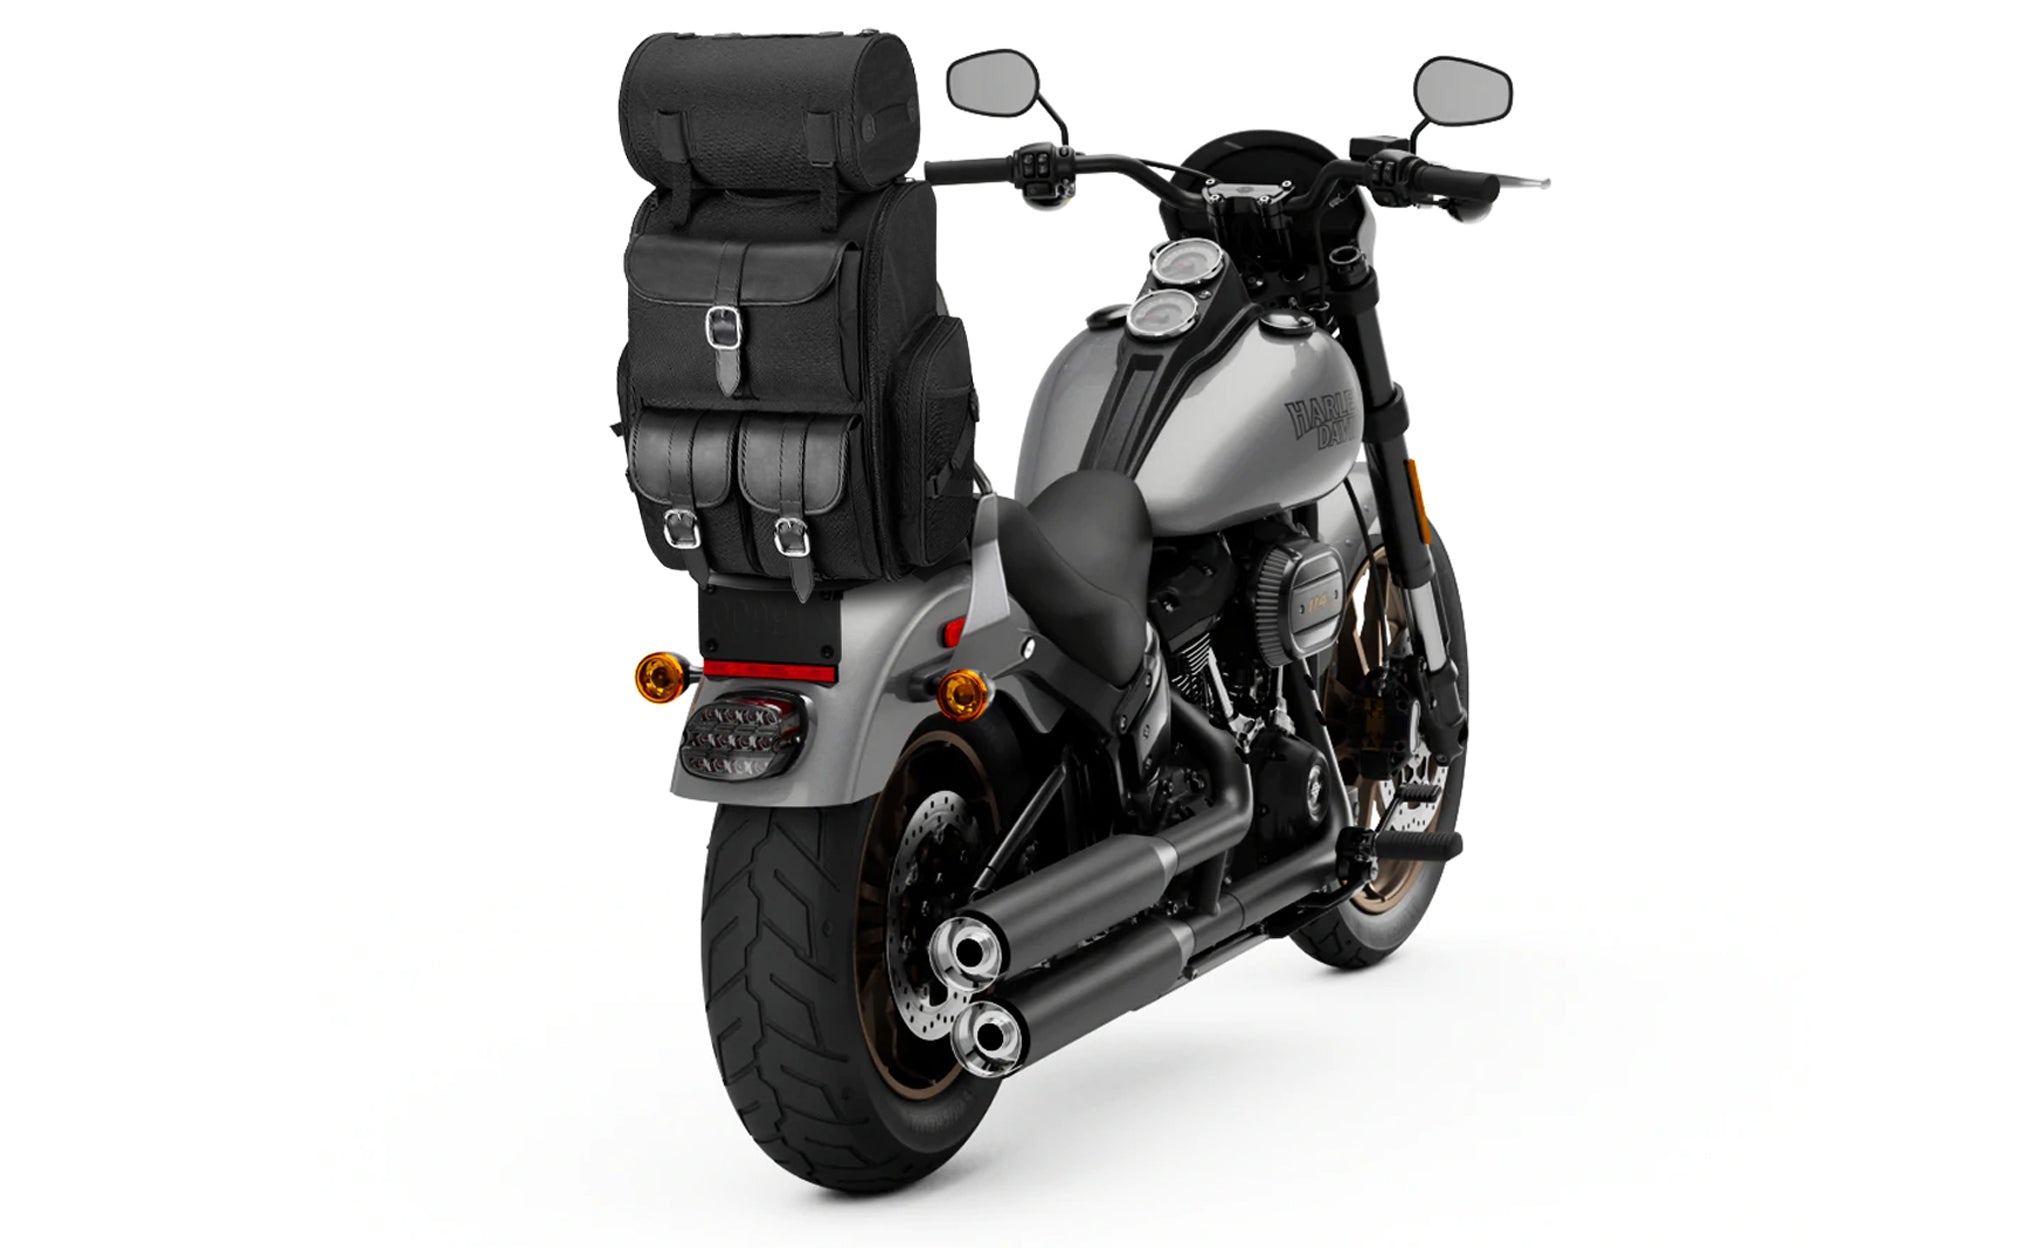 Viking Highway Extra Large Plain Motorcycle Sissy Bar Bag for Harley Davidson Bag on Bike View @expand